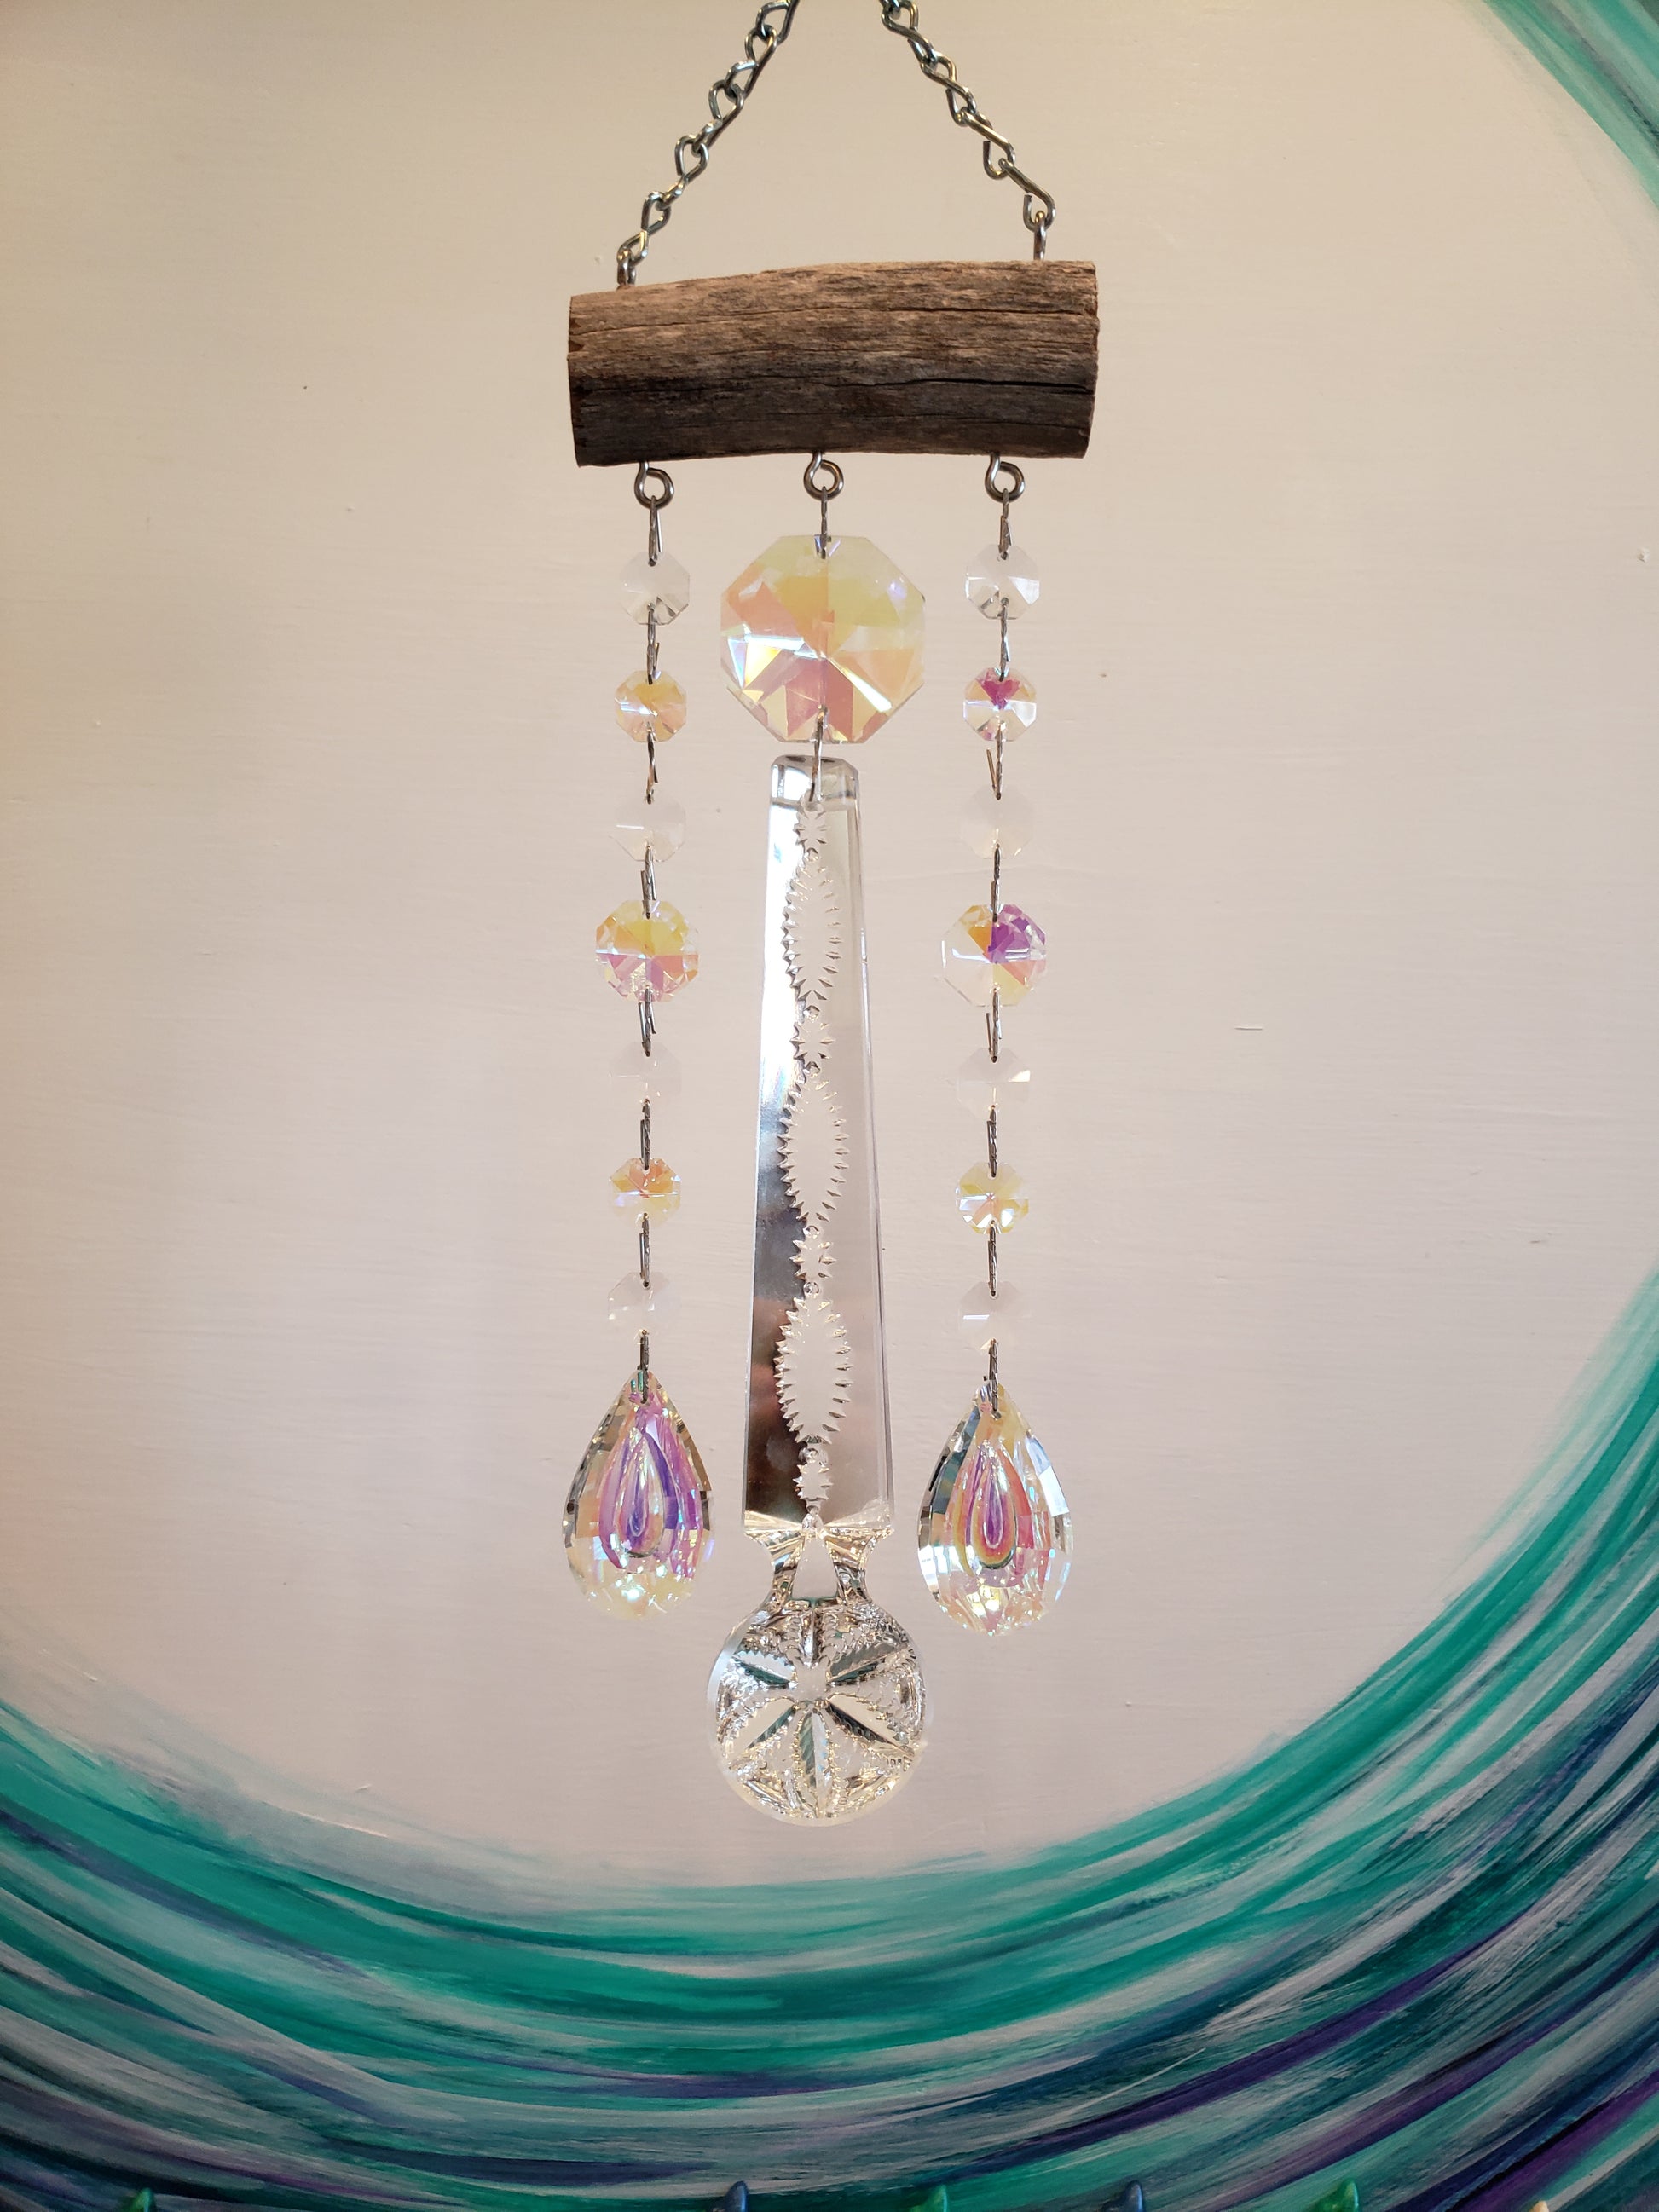 Handmade Driftwood Chandelier crystal windchime suncatcher by Dazzling Driftwood